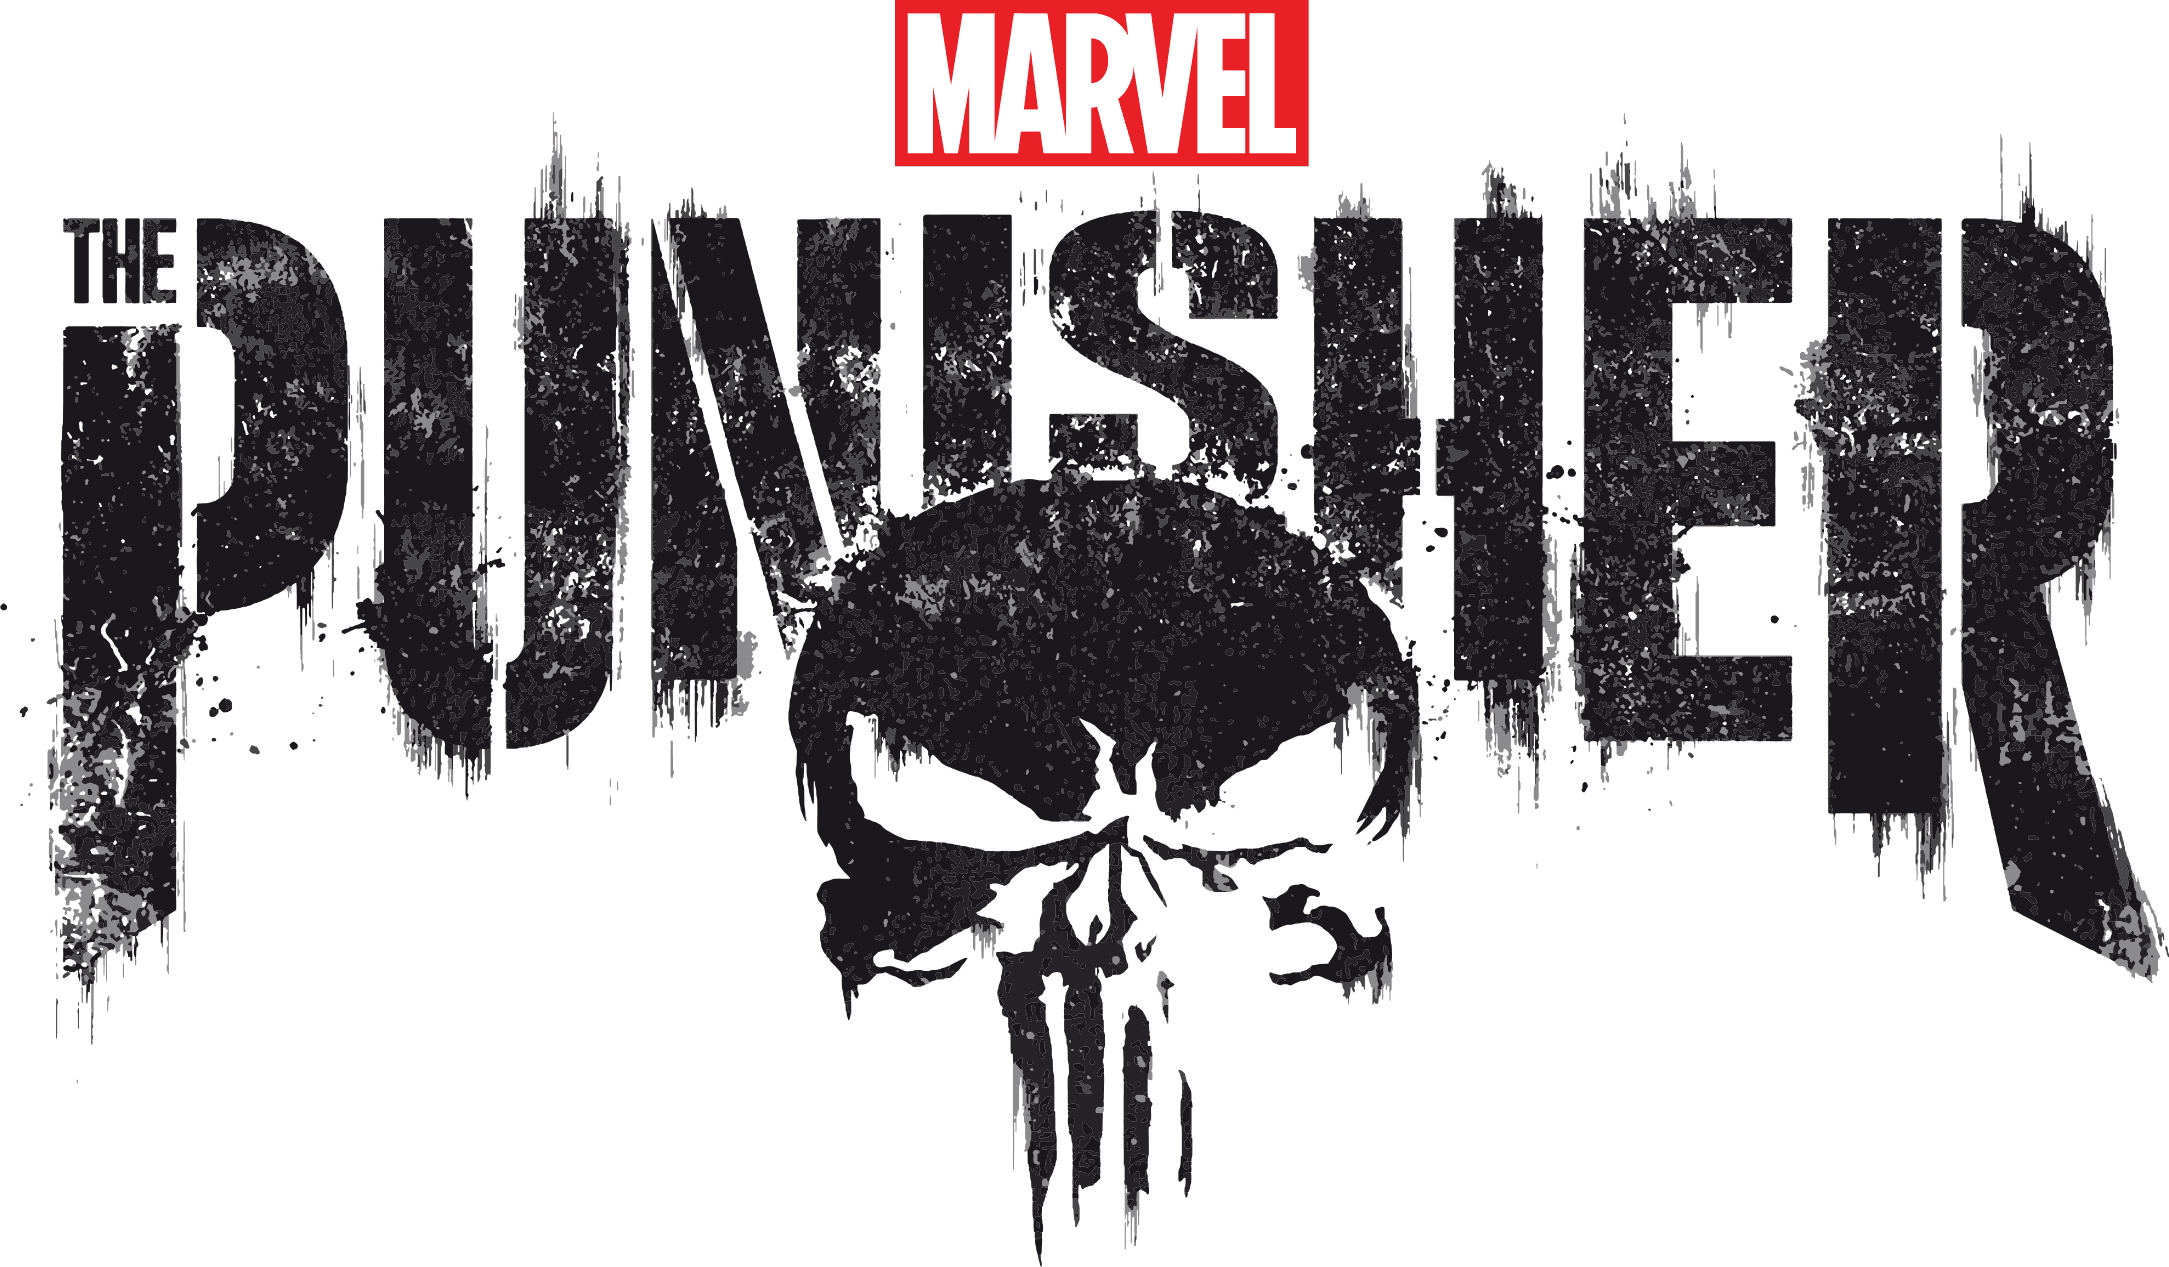 Marvel's The Punisher logo